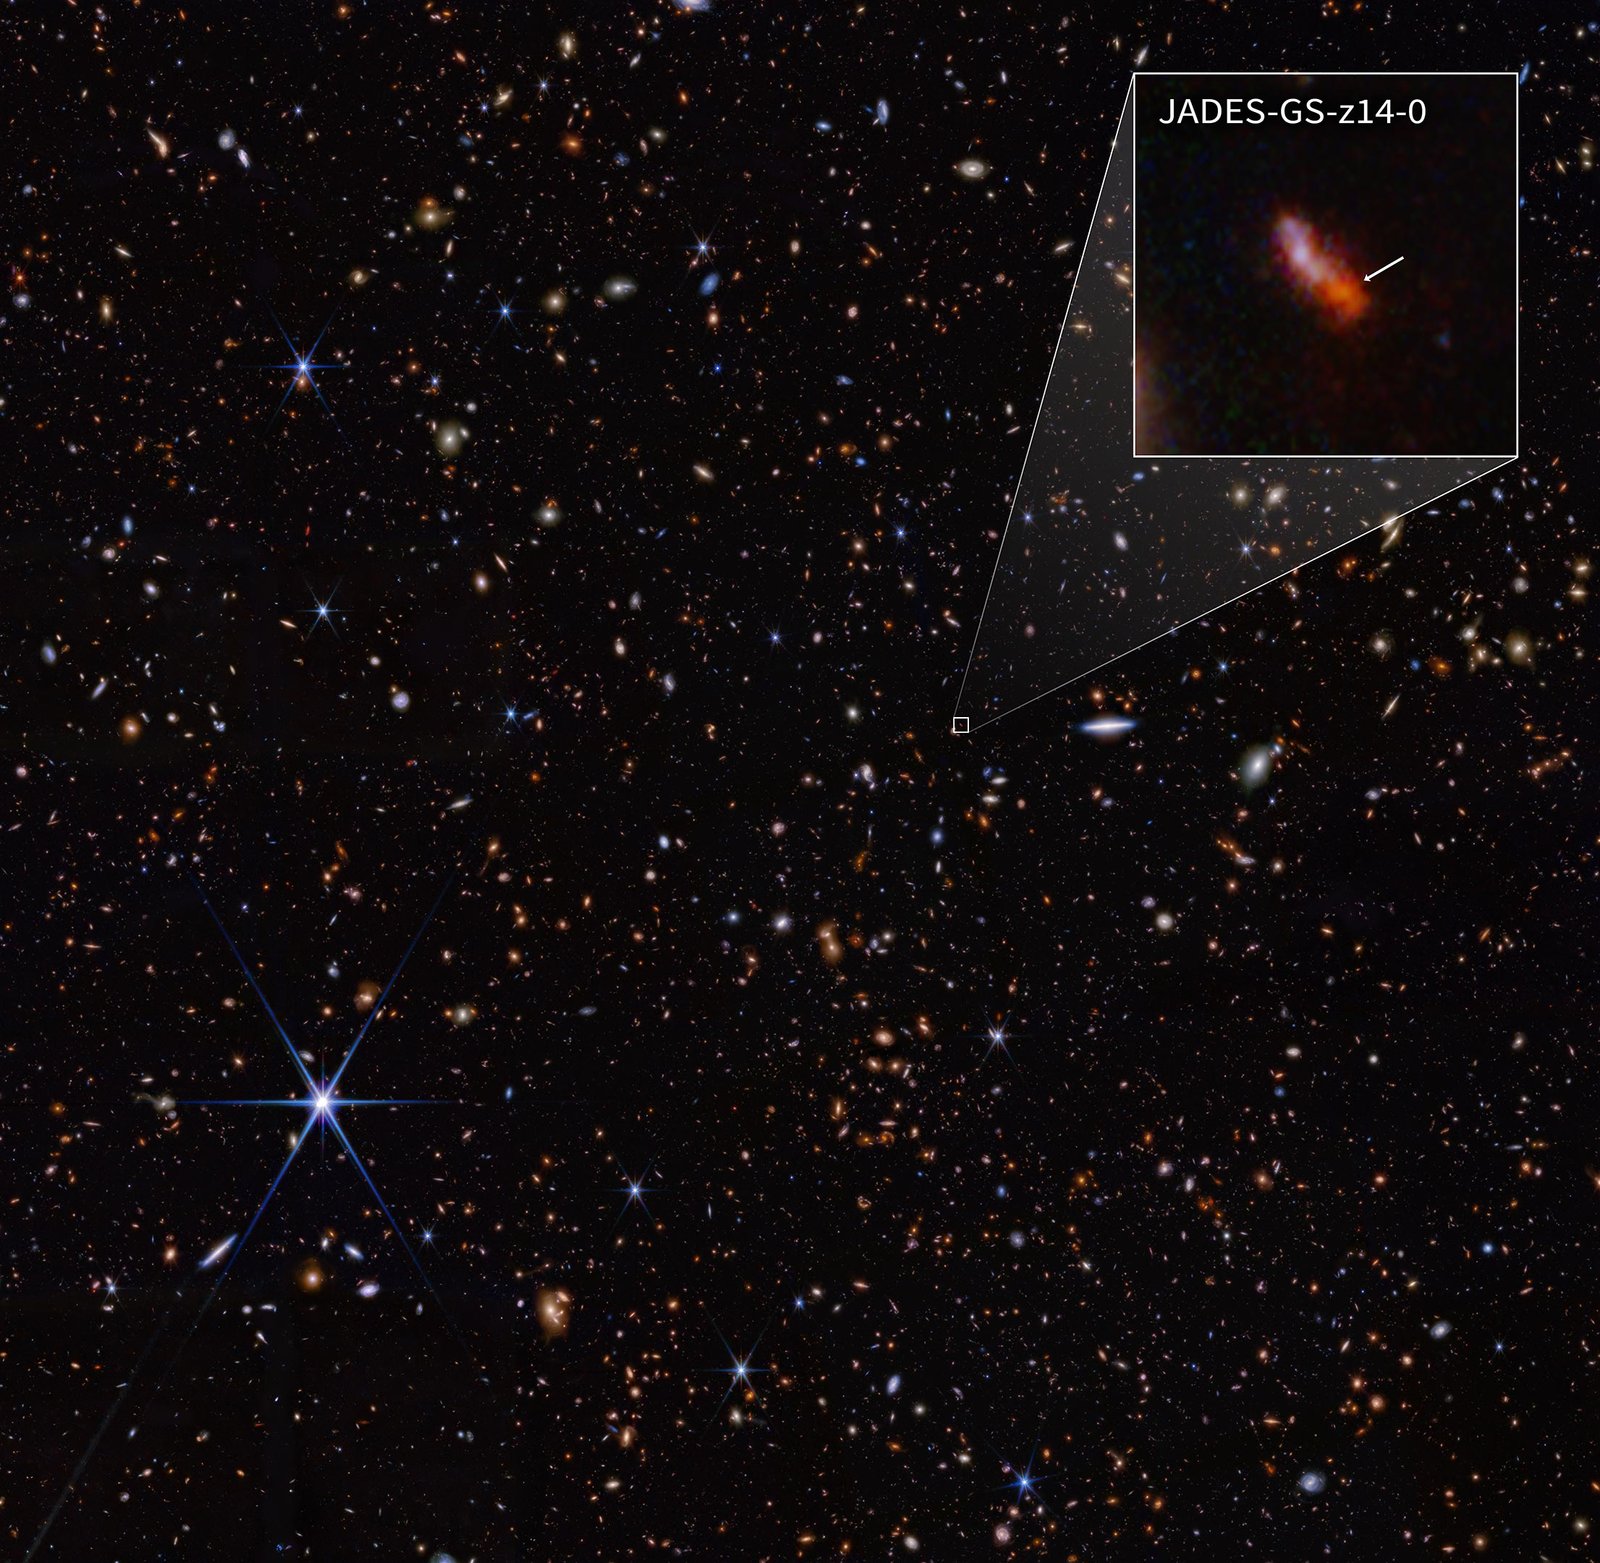 Webb Space Telescope’s Glimpse of Cosmic Dawn